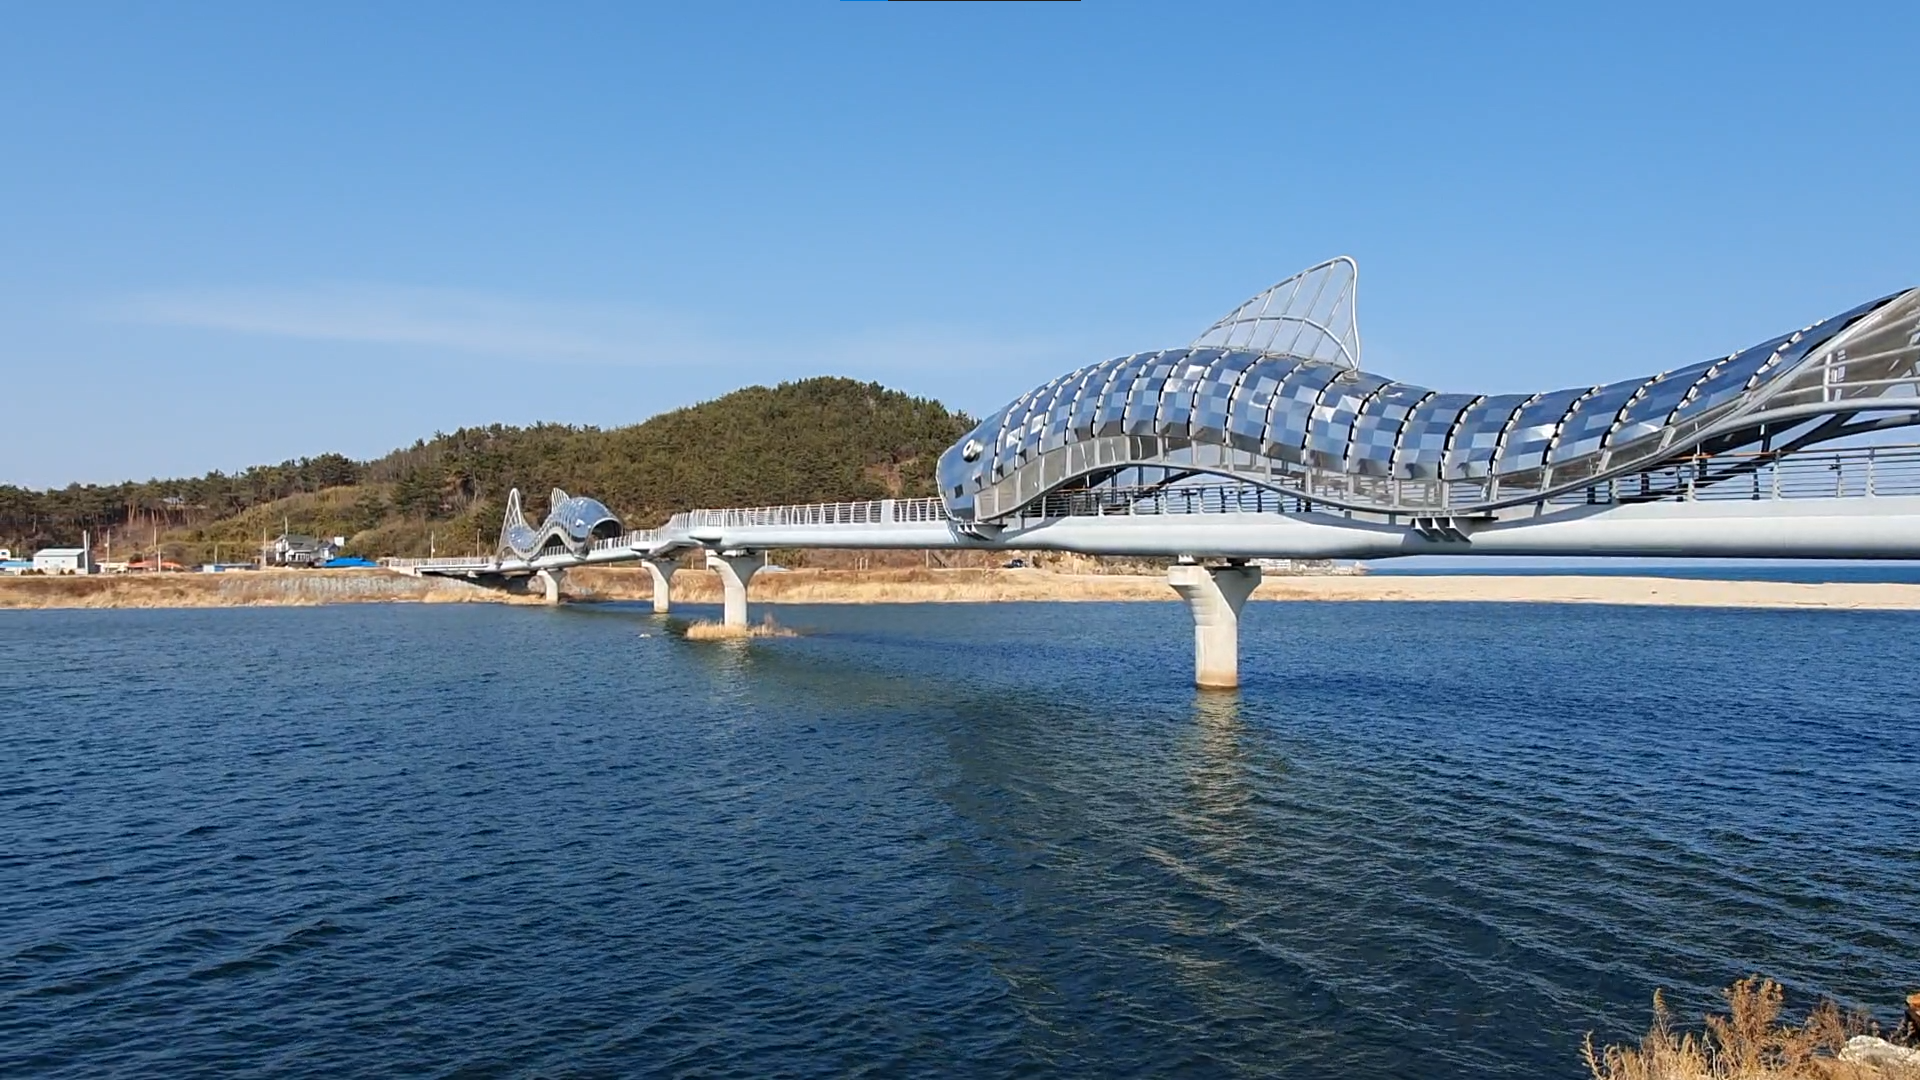 Uljin Sweet Fish Bridge